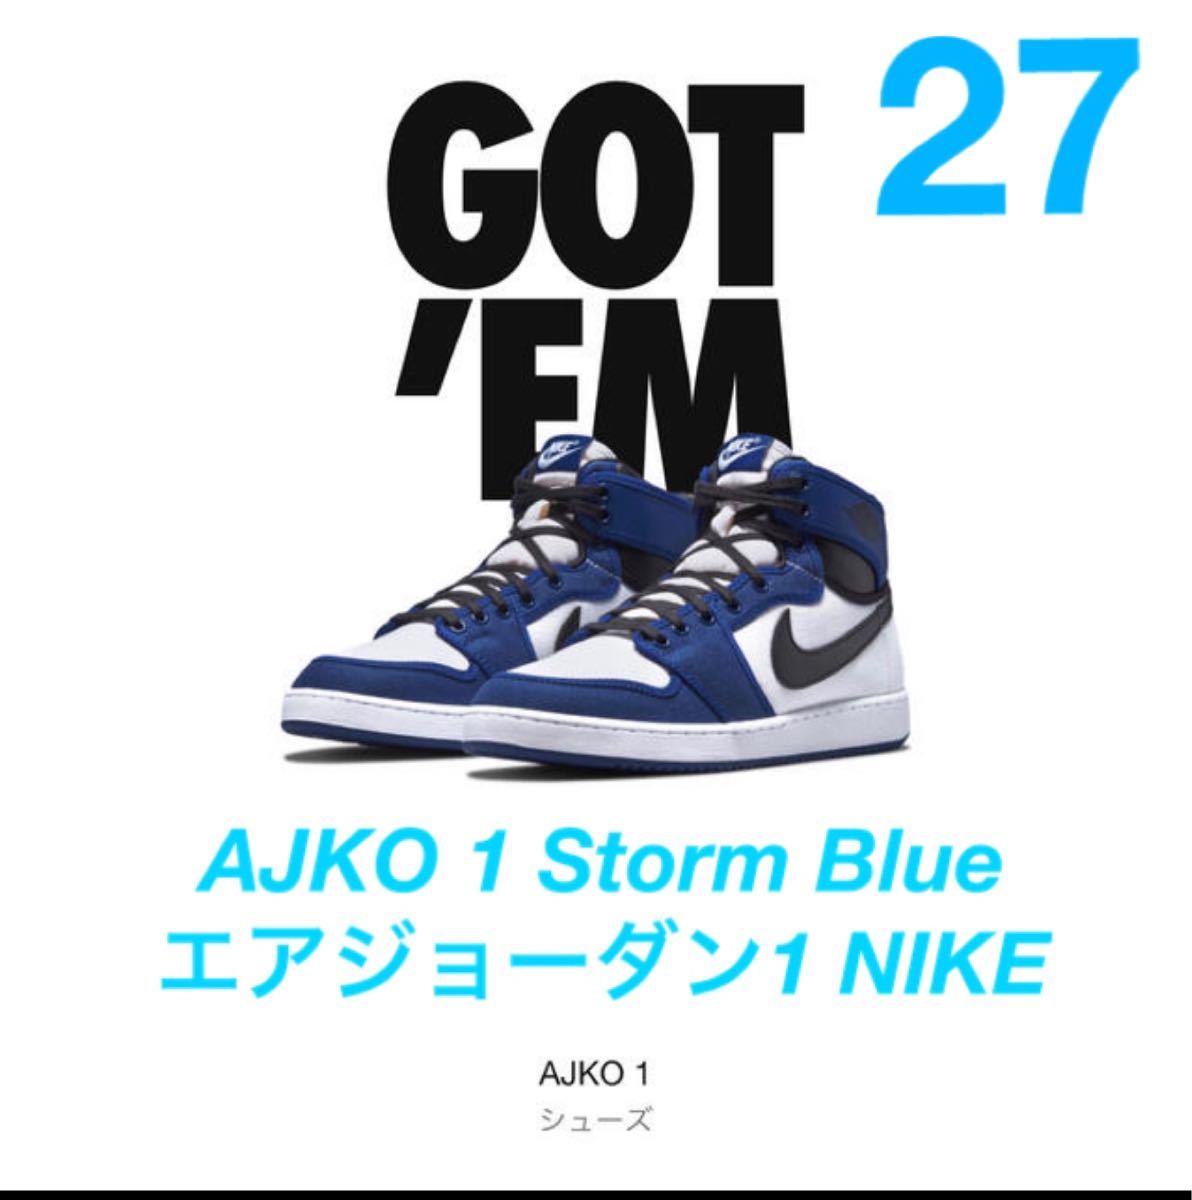 NIKE ジョーダン AJKO1 Storm Blue 27cm AIR JORDAN ナイキエア